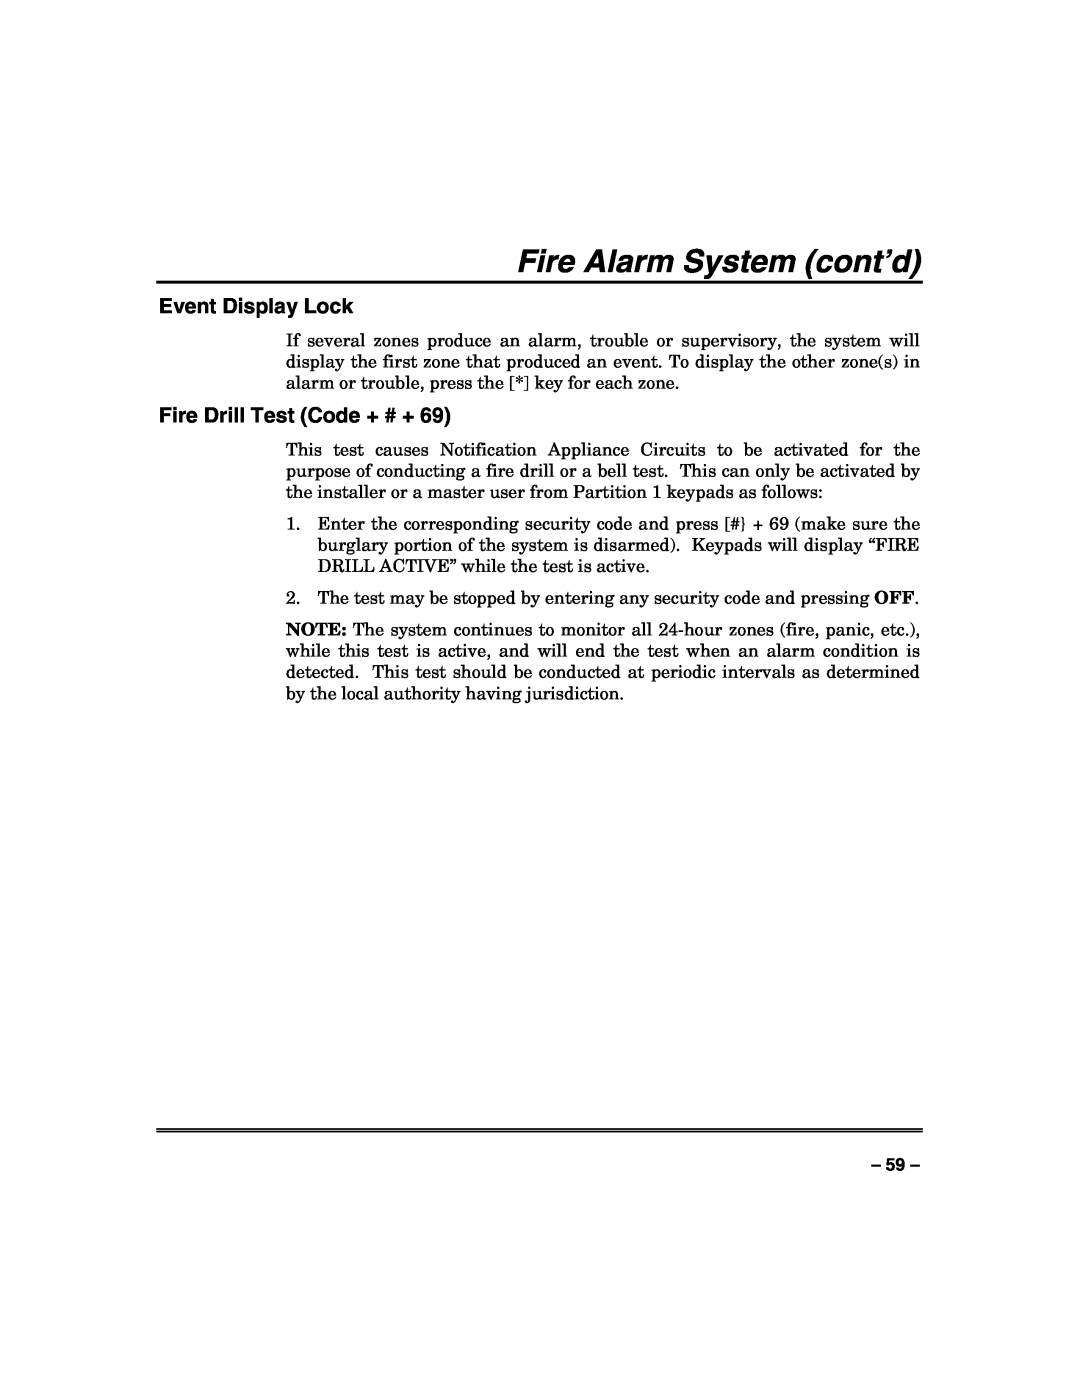 Honeywell VISTA-128FBP, VISTA-250FBP manual Fire Alarm System cont’d, Event Display Lock, Fire Drill Test Code + # + 